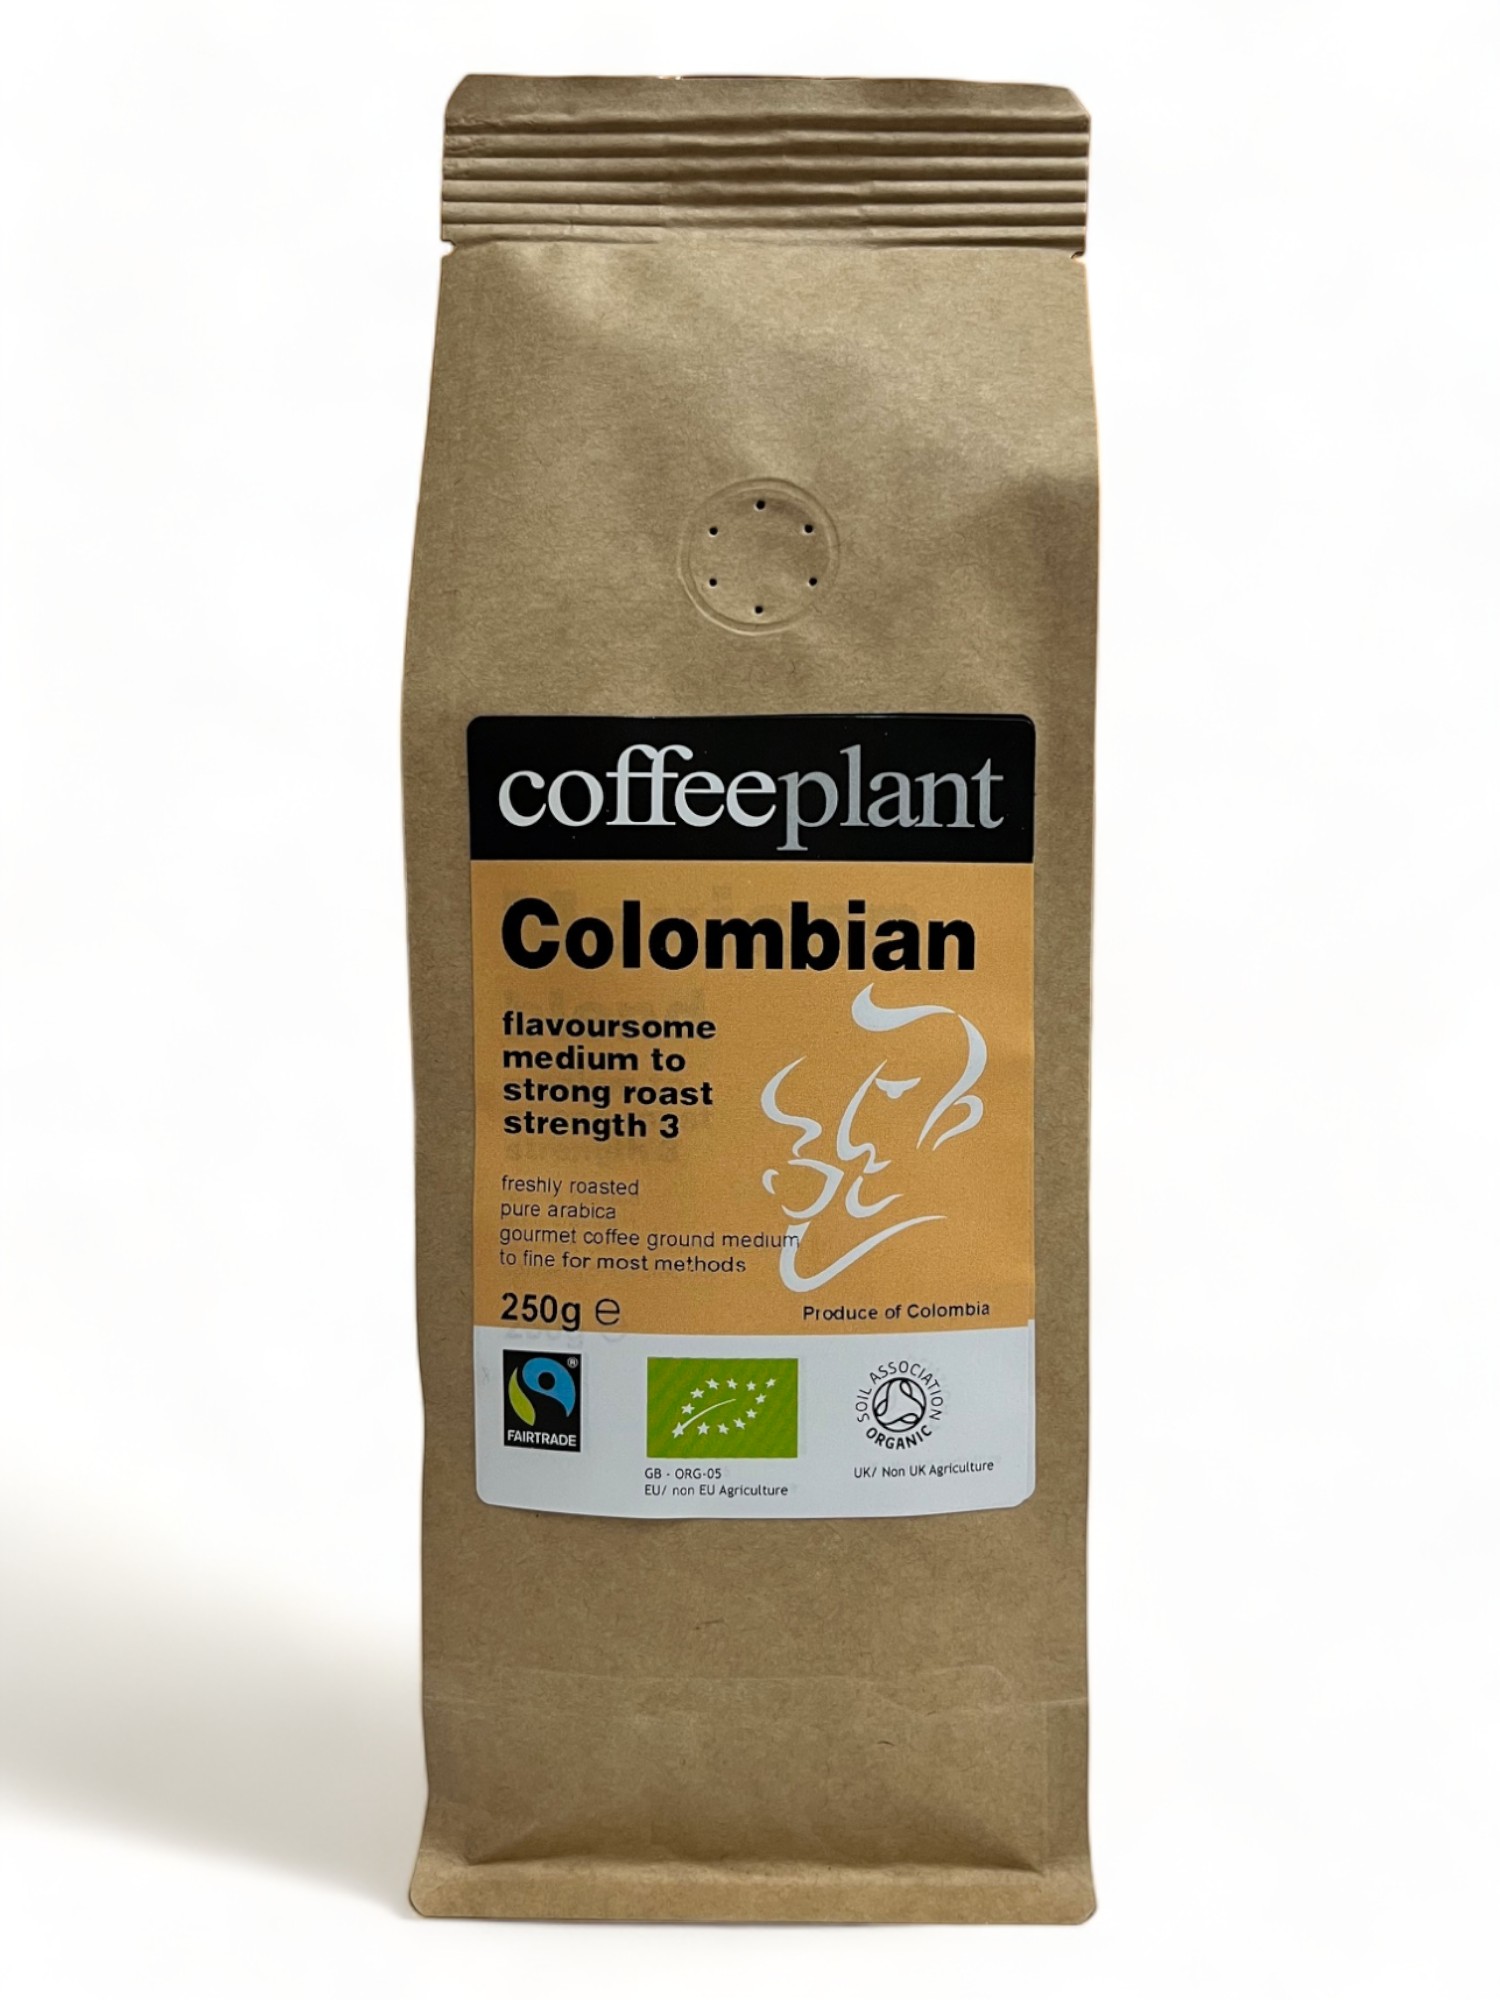 Colombian Organic Fairtrade 250g Ground Valve Pack